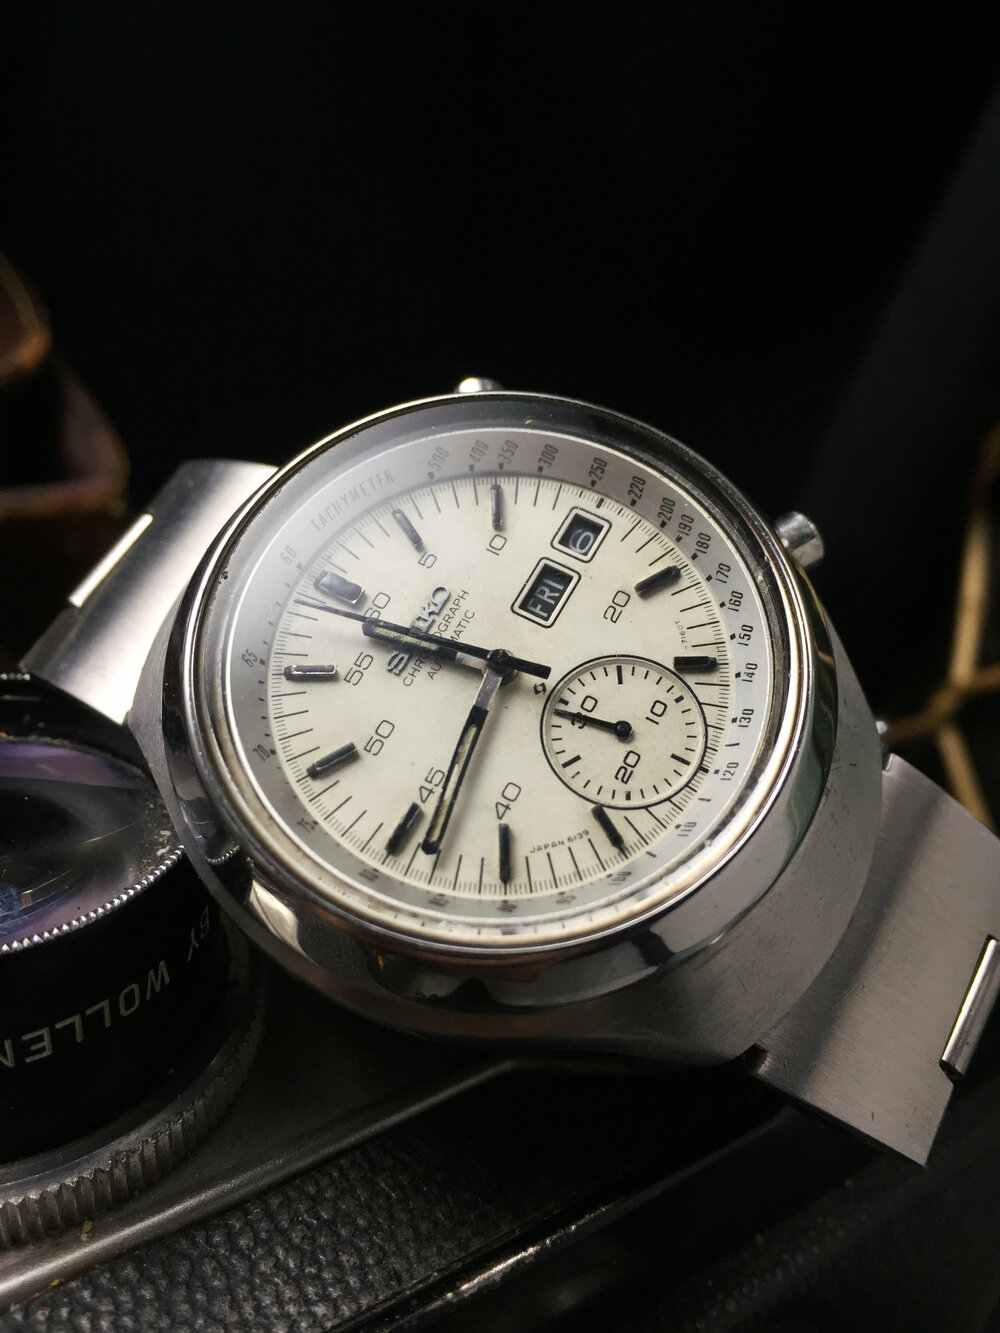 Seiko Chronograph 6139 — Cool Vintage Watches